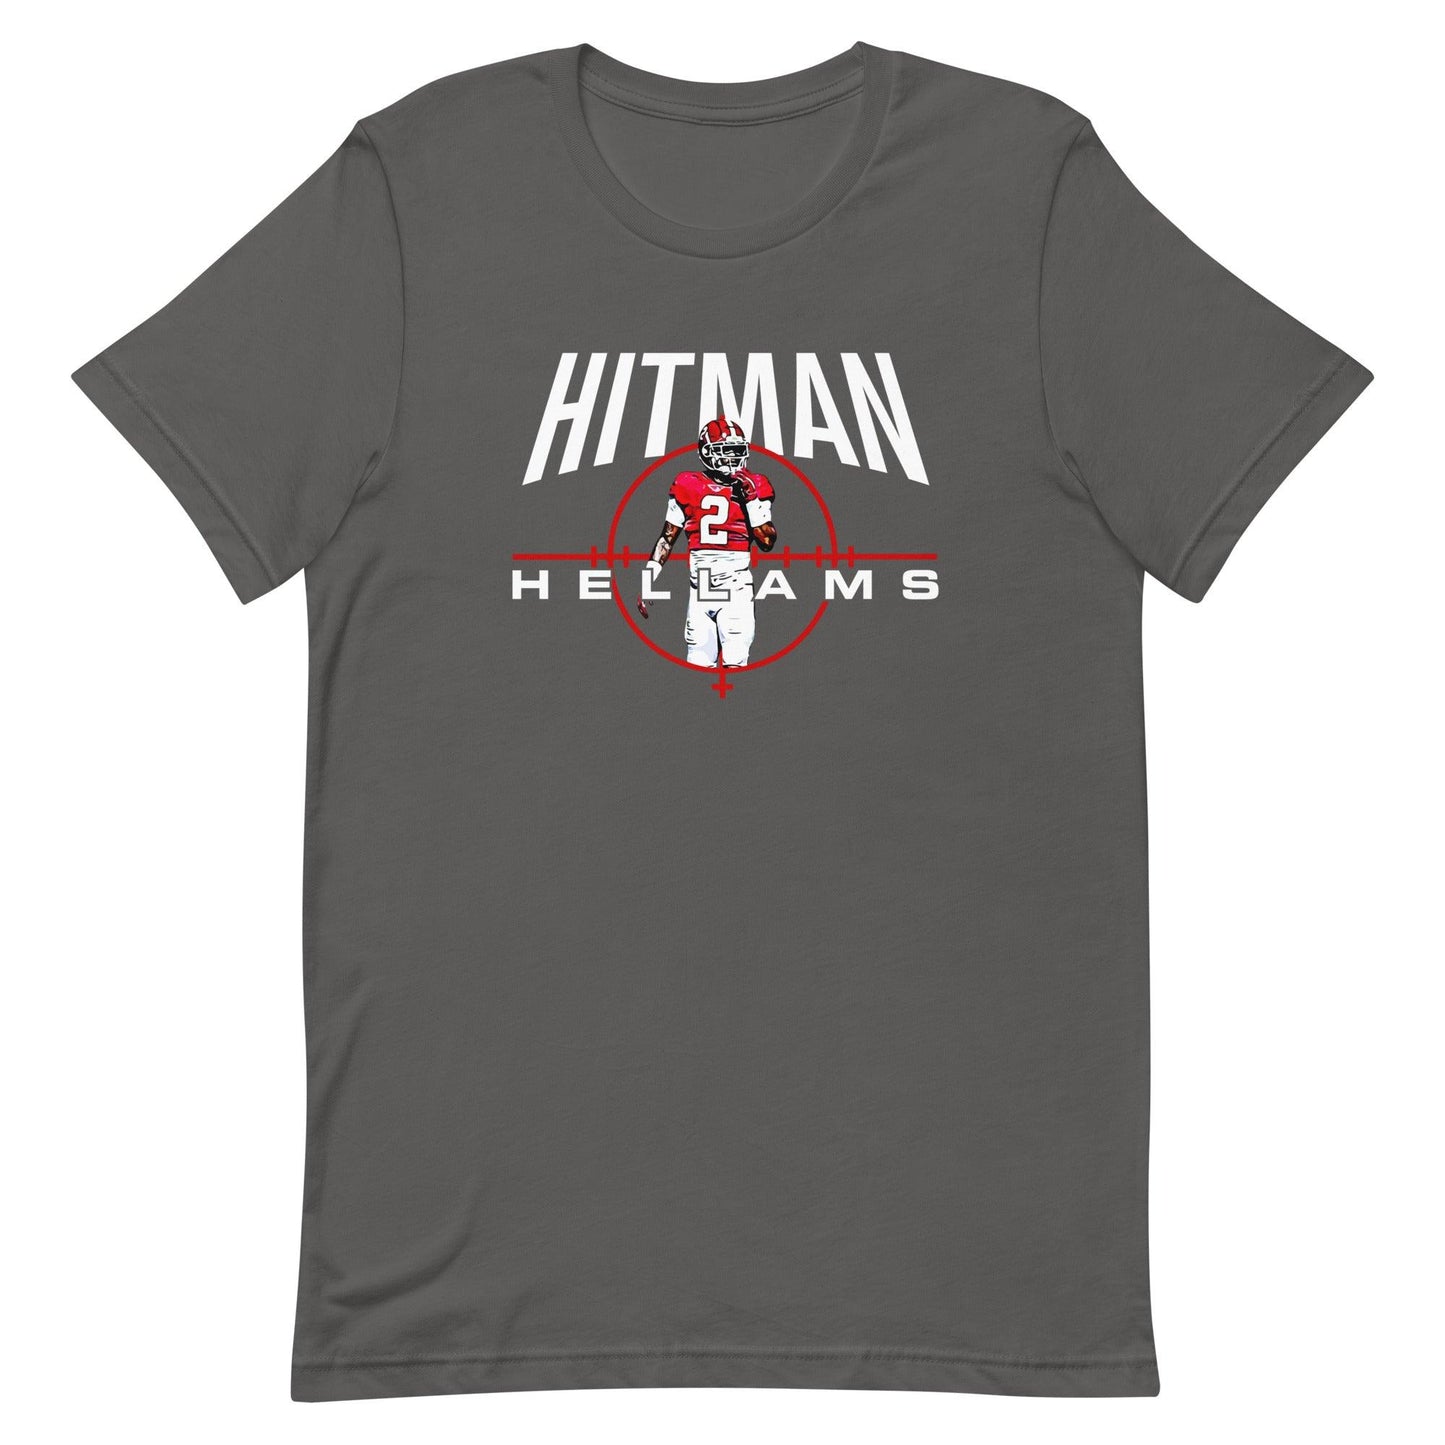 DeMarcco Hellams "Hitman" t-shirt - Fan Arch